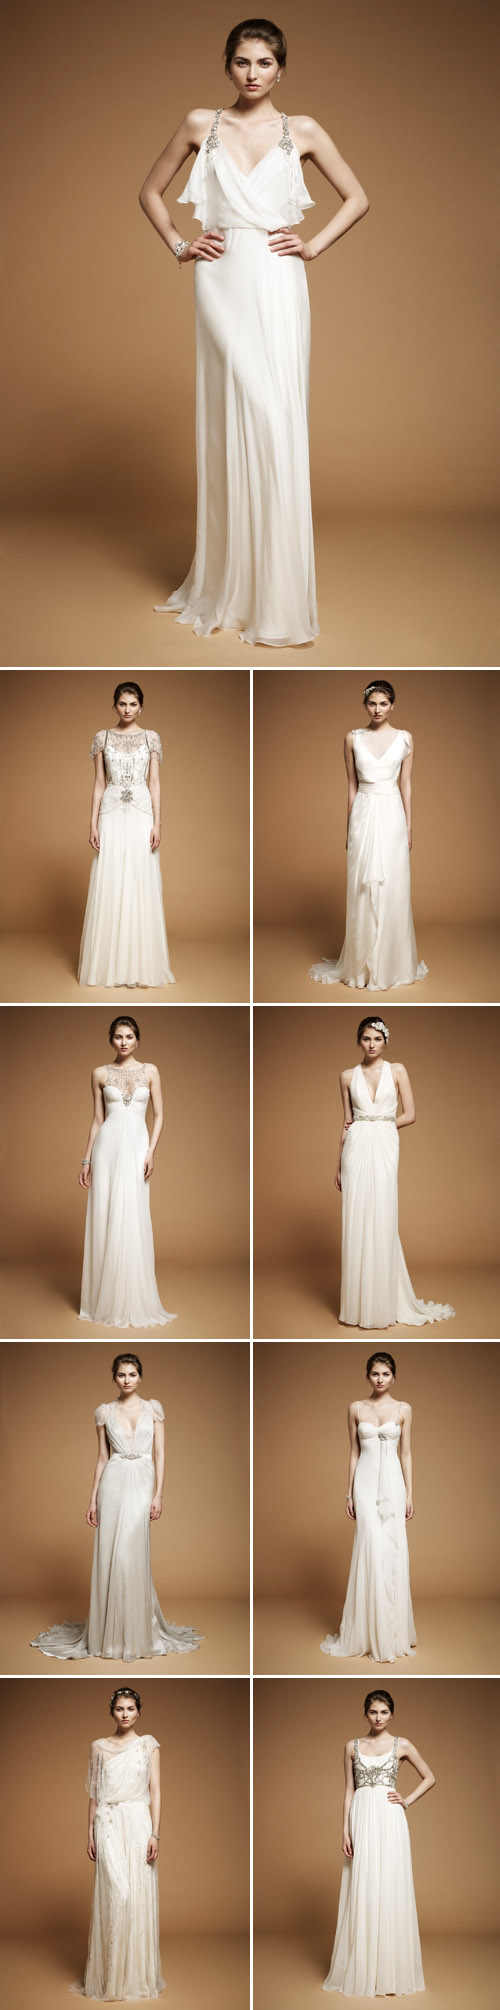 Jenny Packham spring summer 2012 wedding dress collection, vintage inspired glamorous wedding dresses